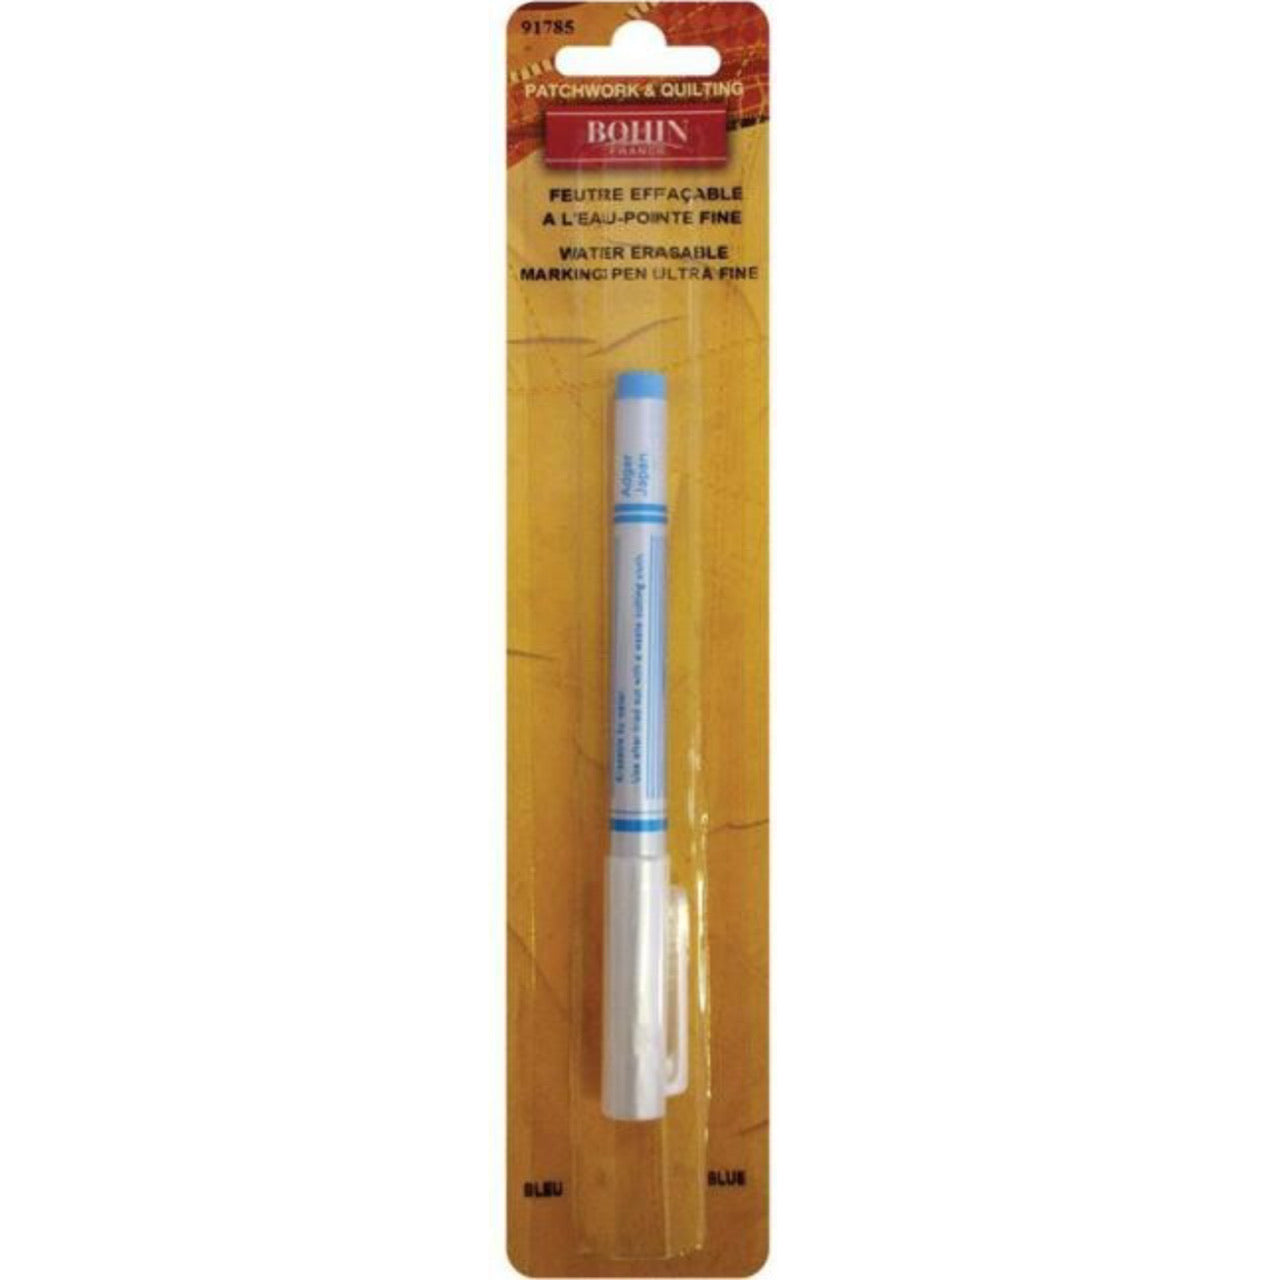 Water Erasable Marking Pen - Extra Fine - Blue